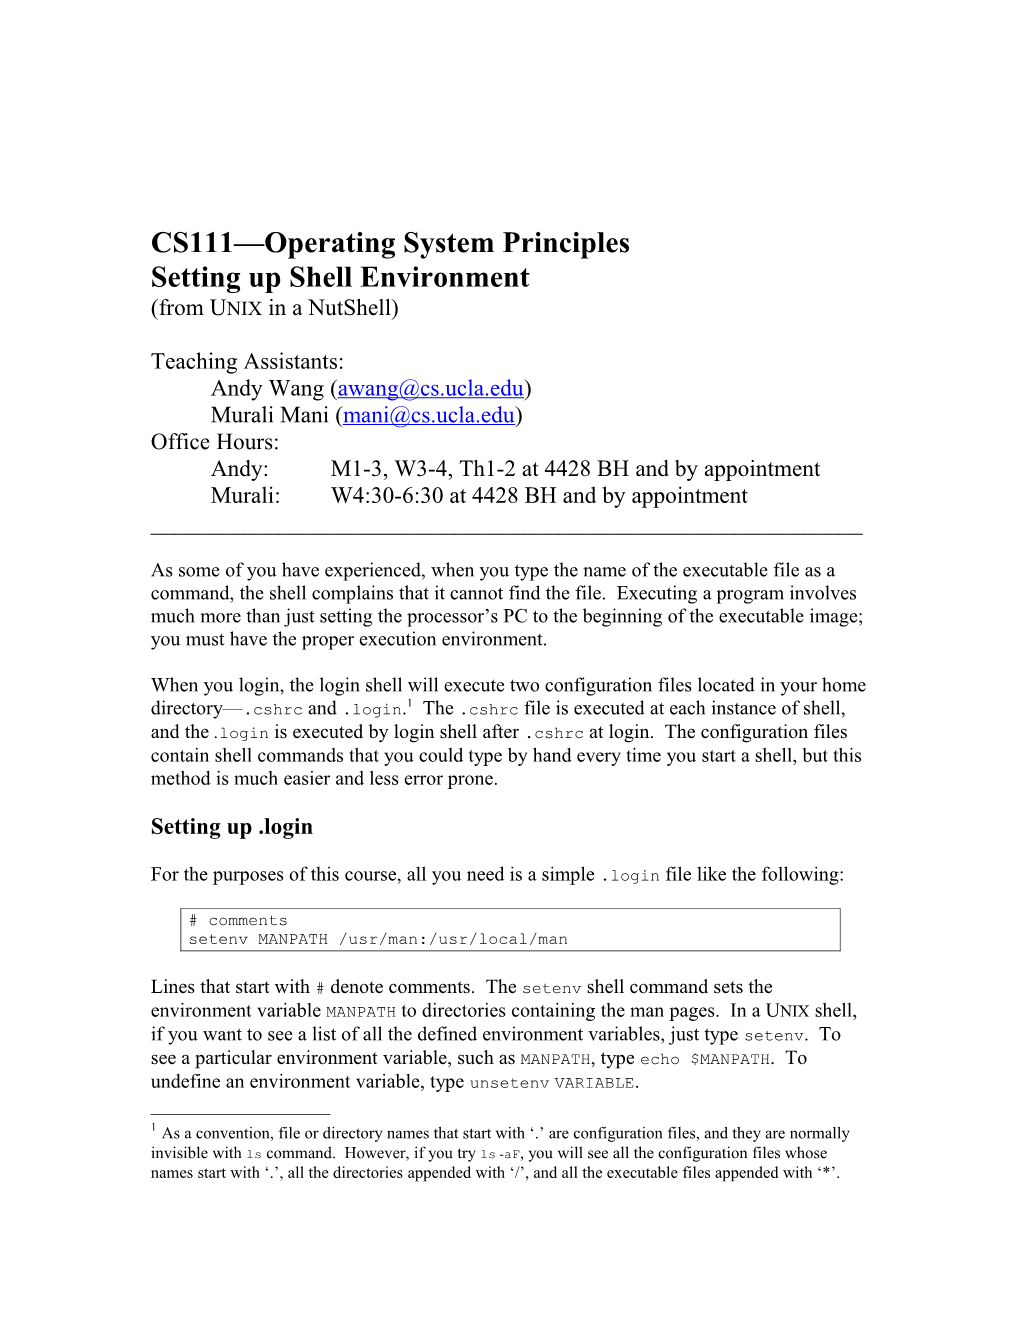 CS111 Operating System Principles s3